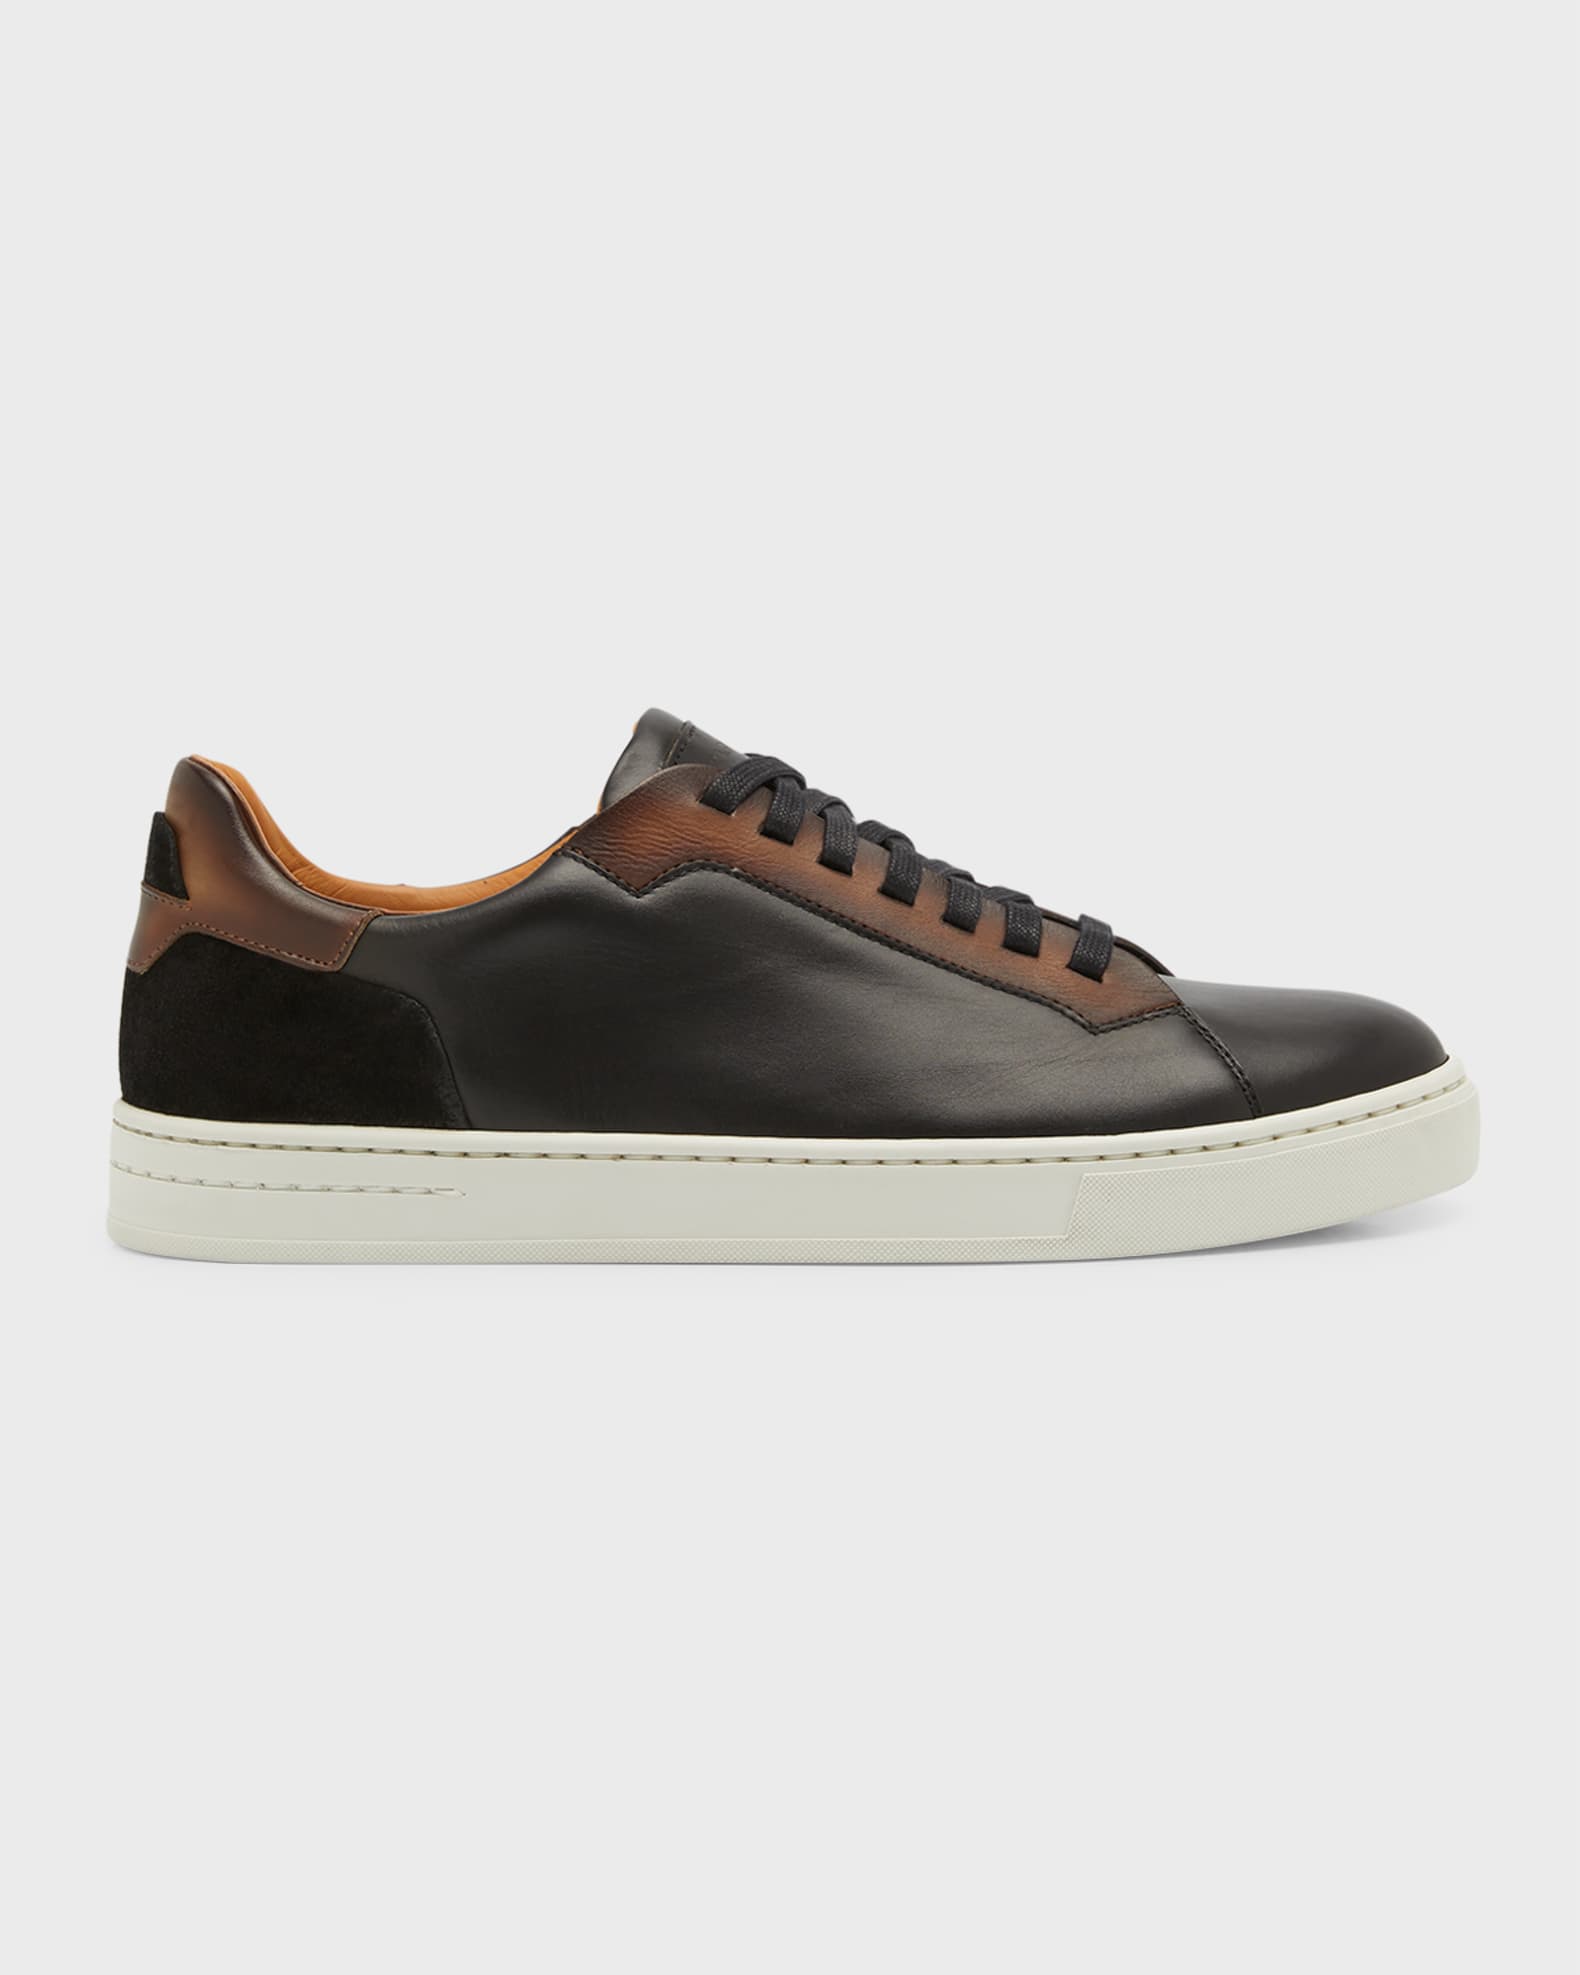 Magnanni Men's Amadeo Bicolor Leather Low-Top Sneakers | Neiman Marcus